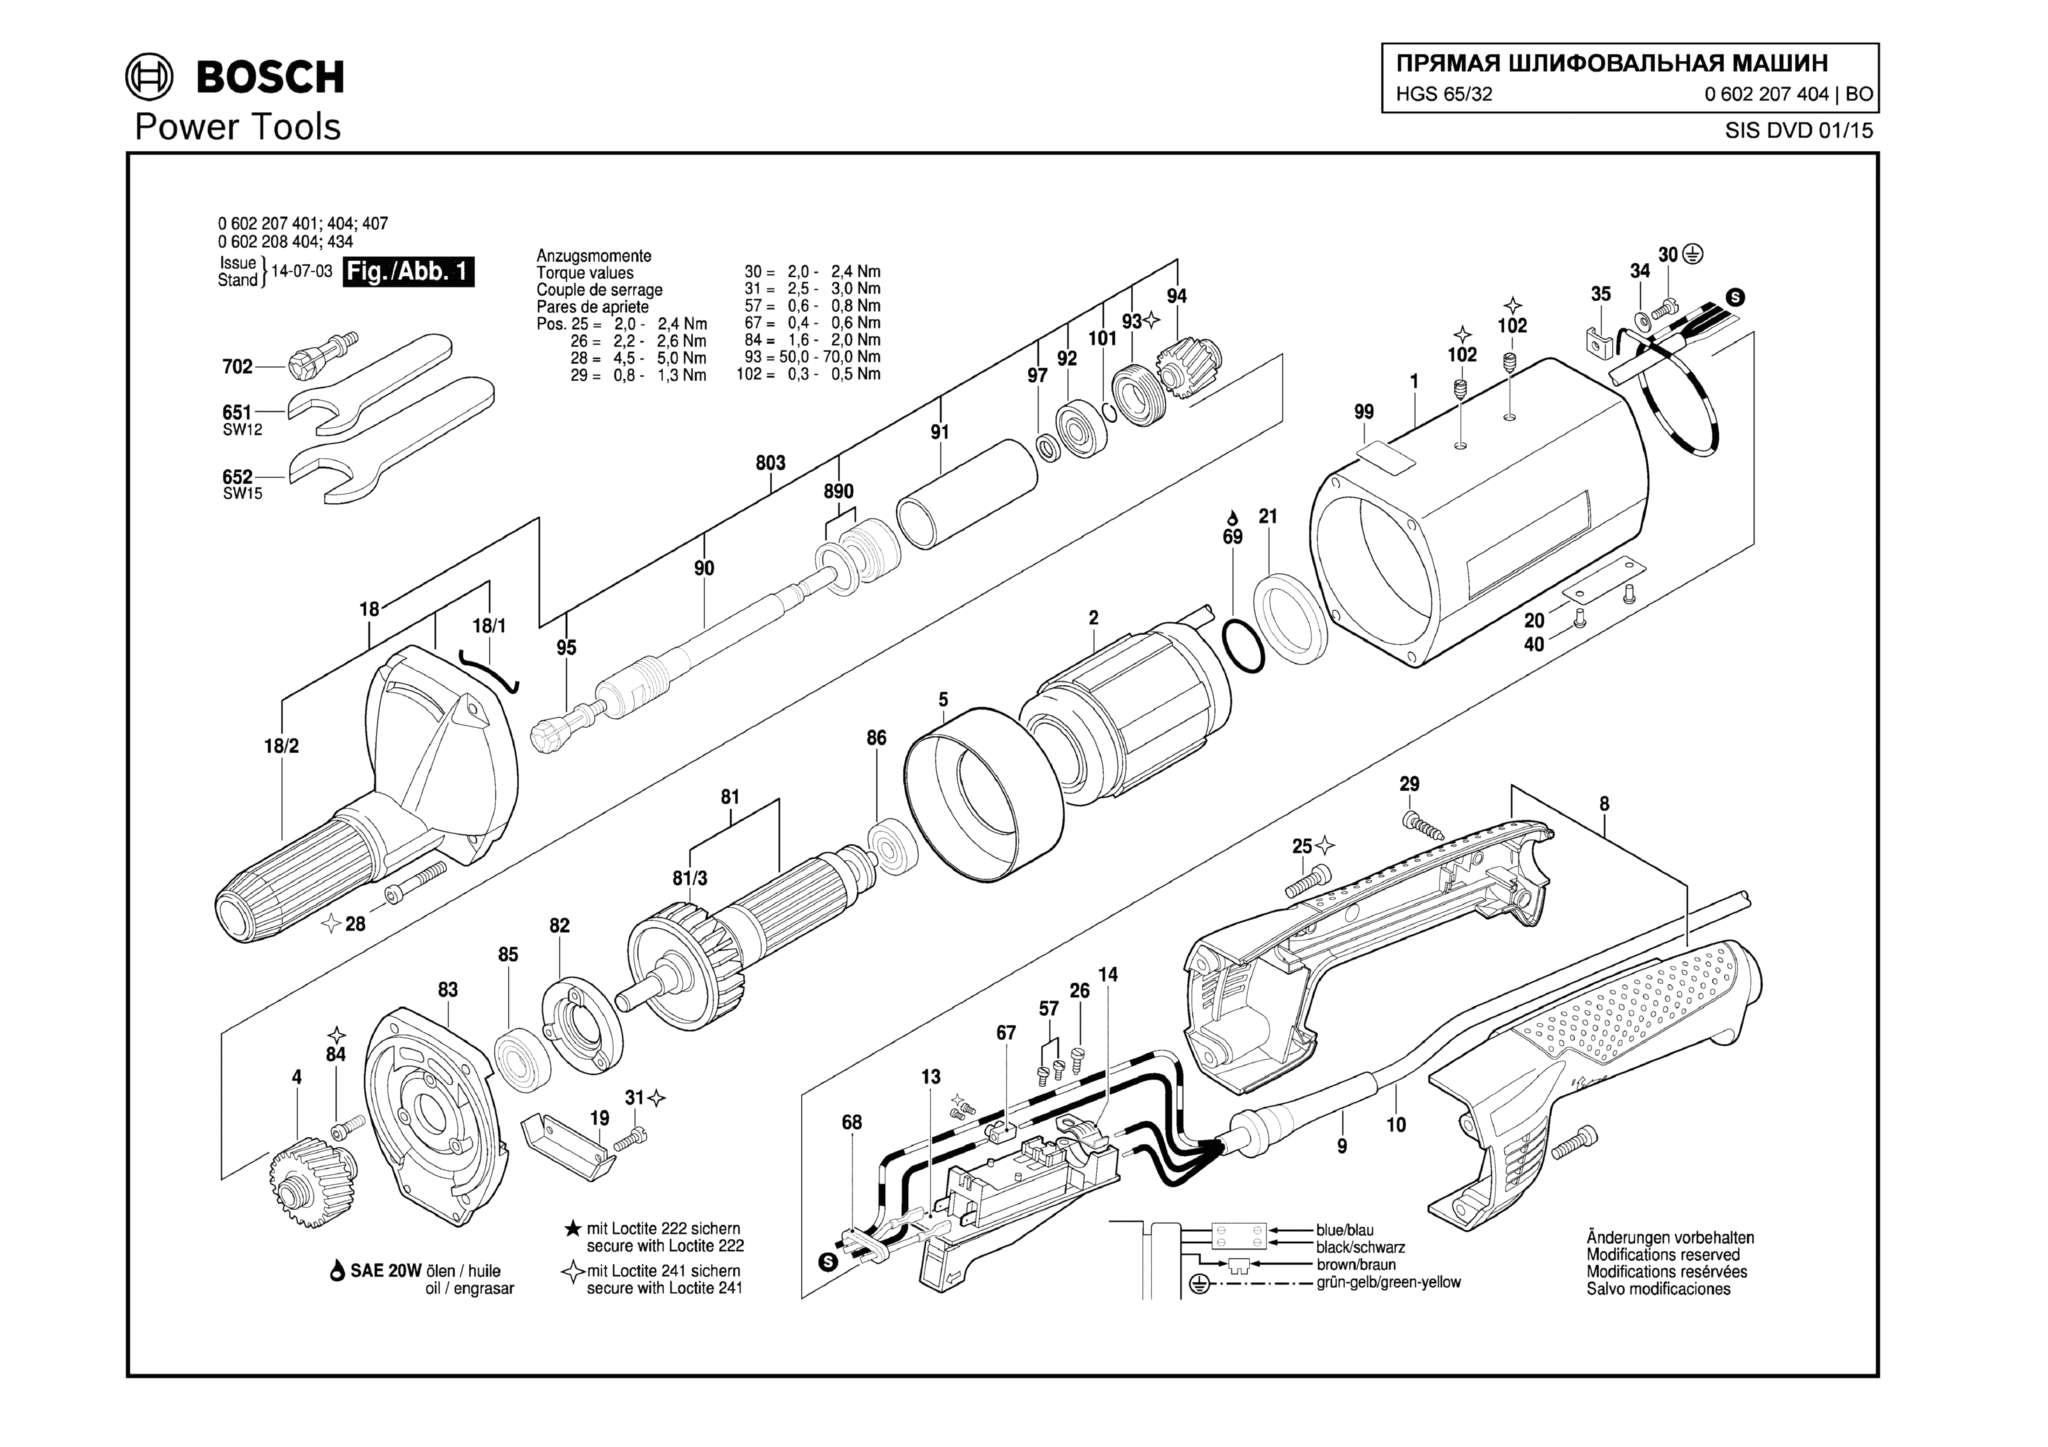 Запчасти, схема и деталировка Bosch HGS 65/32 (ТИП 0602207404)